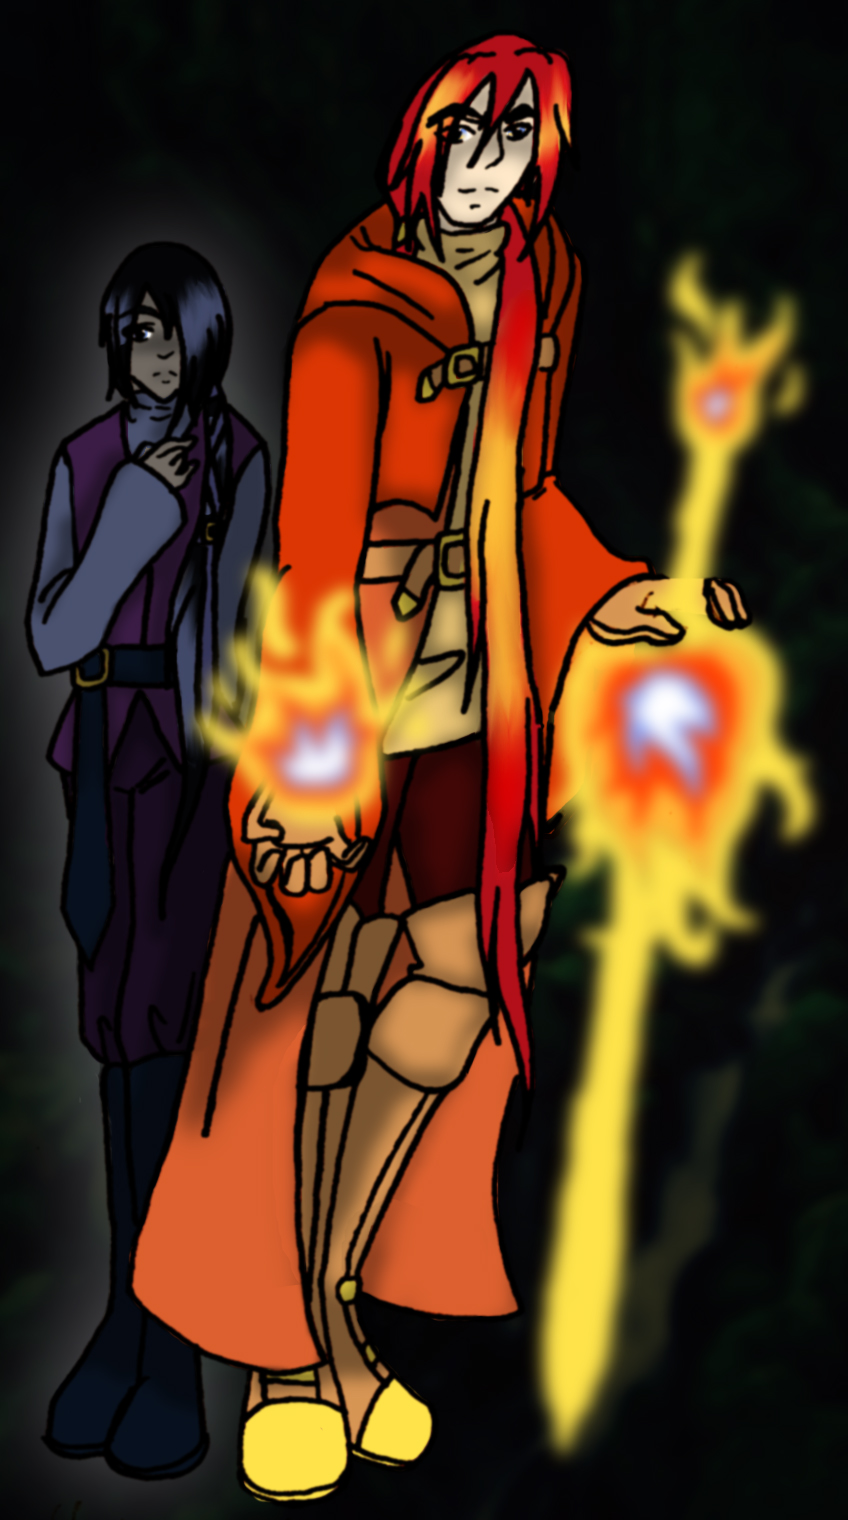 The Power of Flame by YukiHana